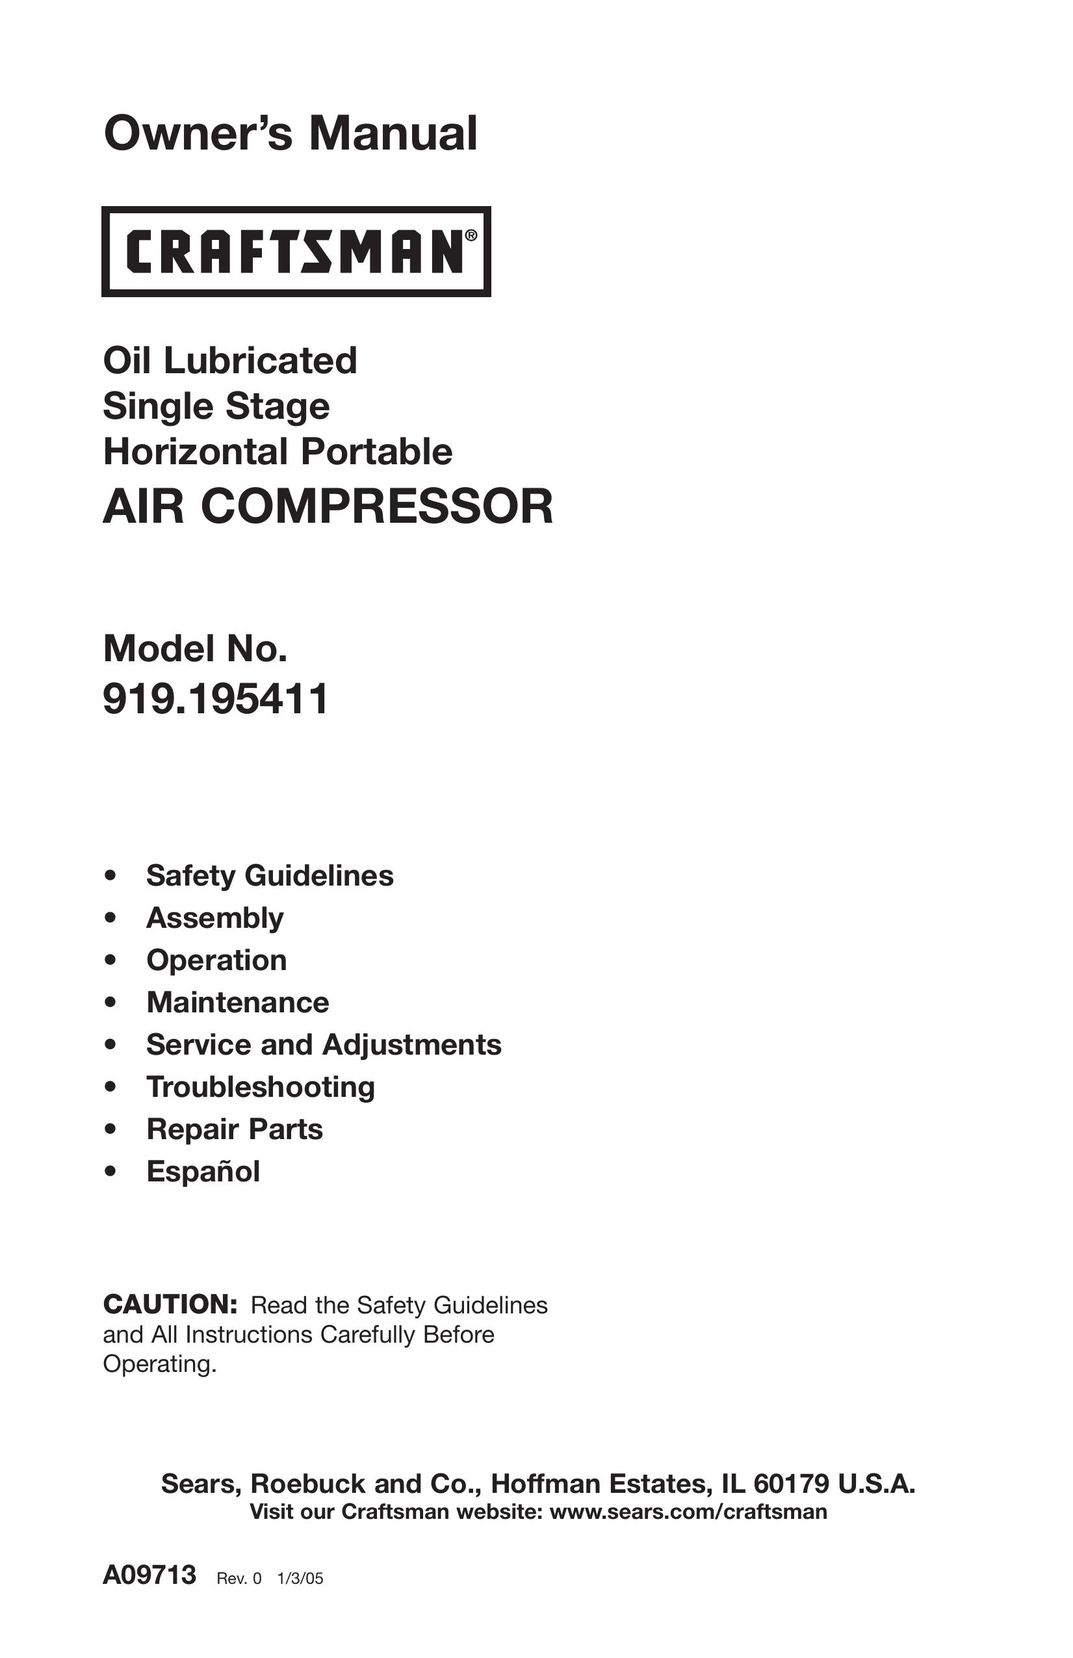 Craftsman 919.195411 Air Compressor User Manual